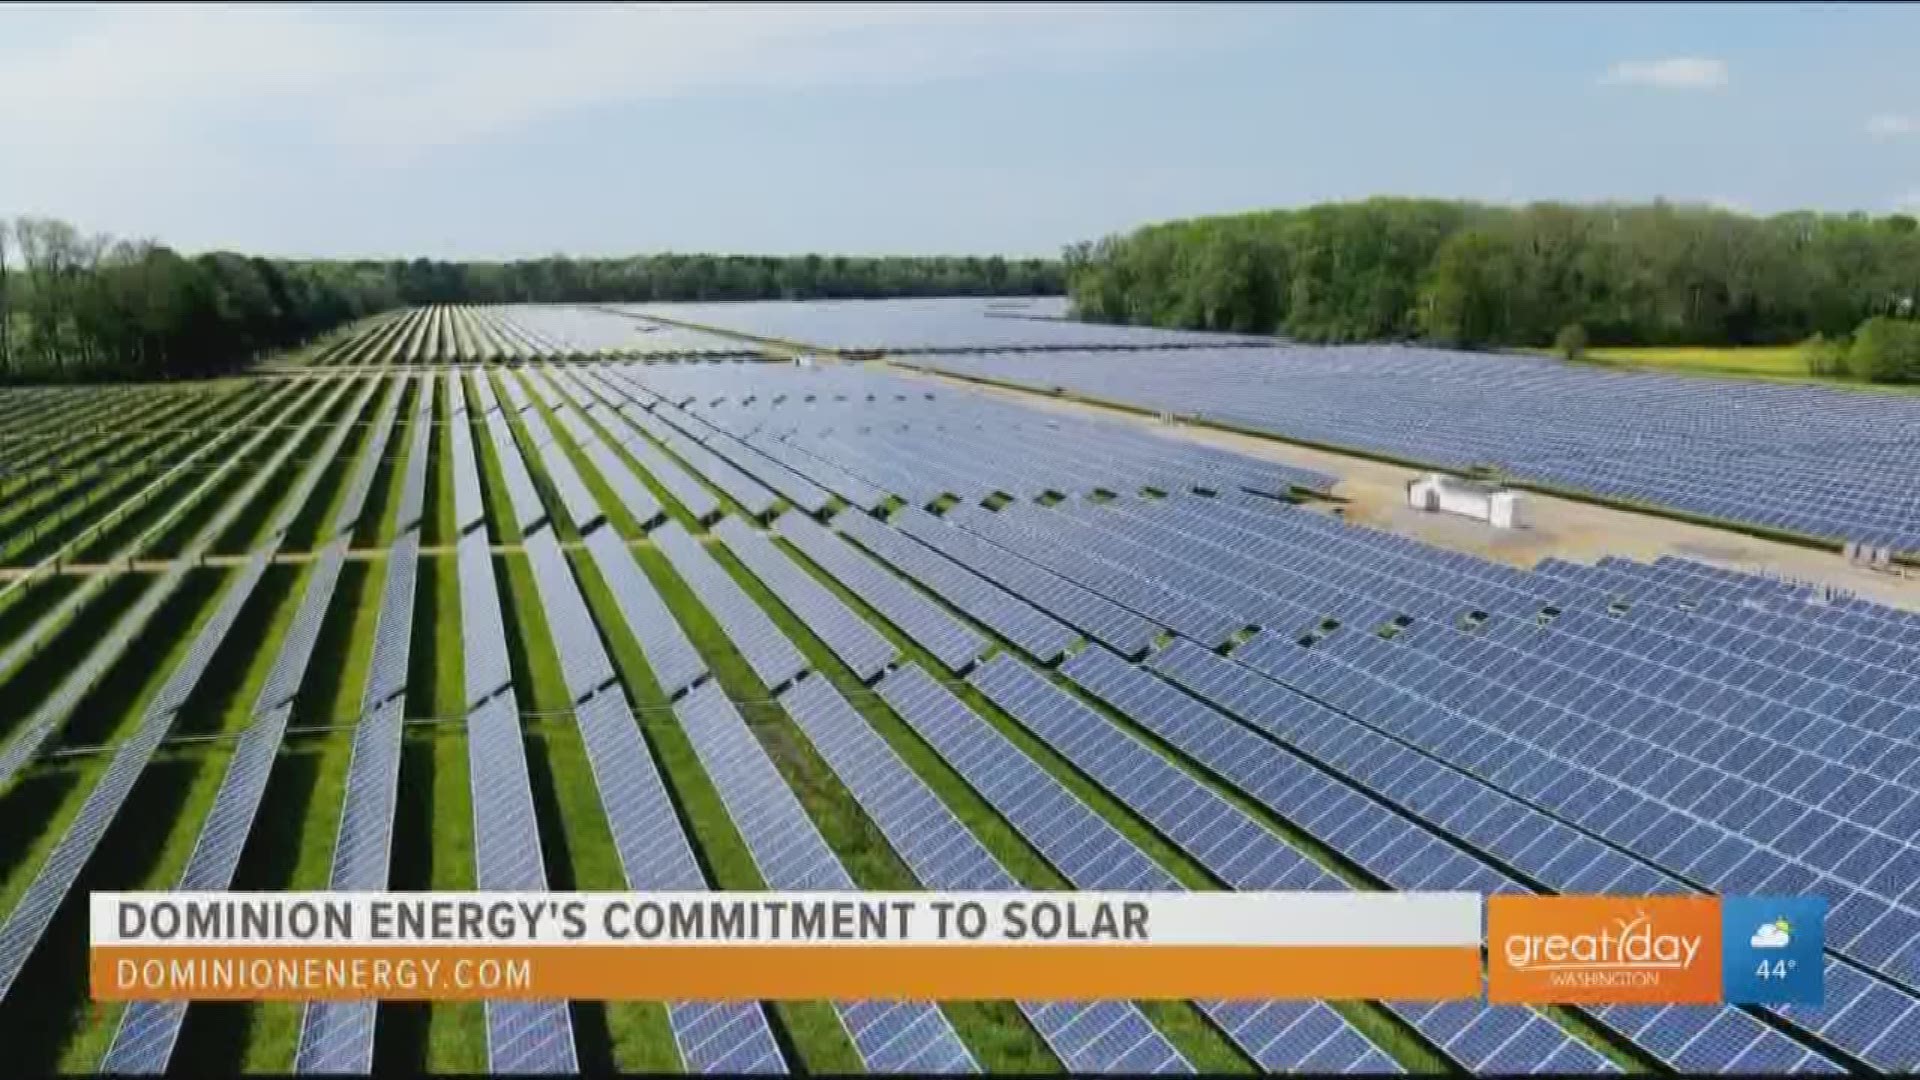 New Dominion Energy solar farm will help Arlington County reach its renewable energy goals. Sponsored by Dominion Energy.